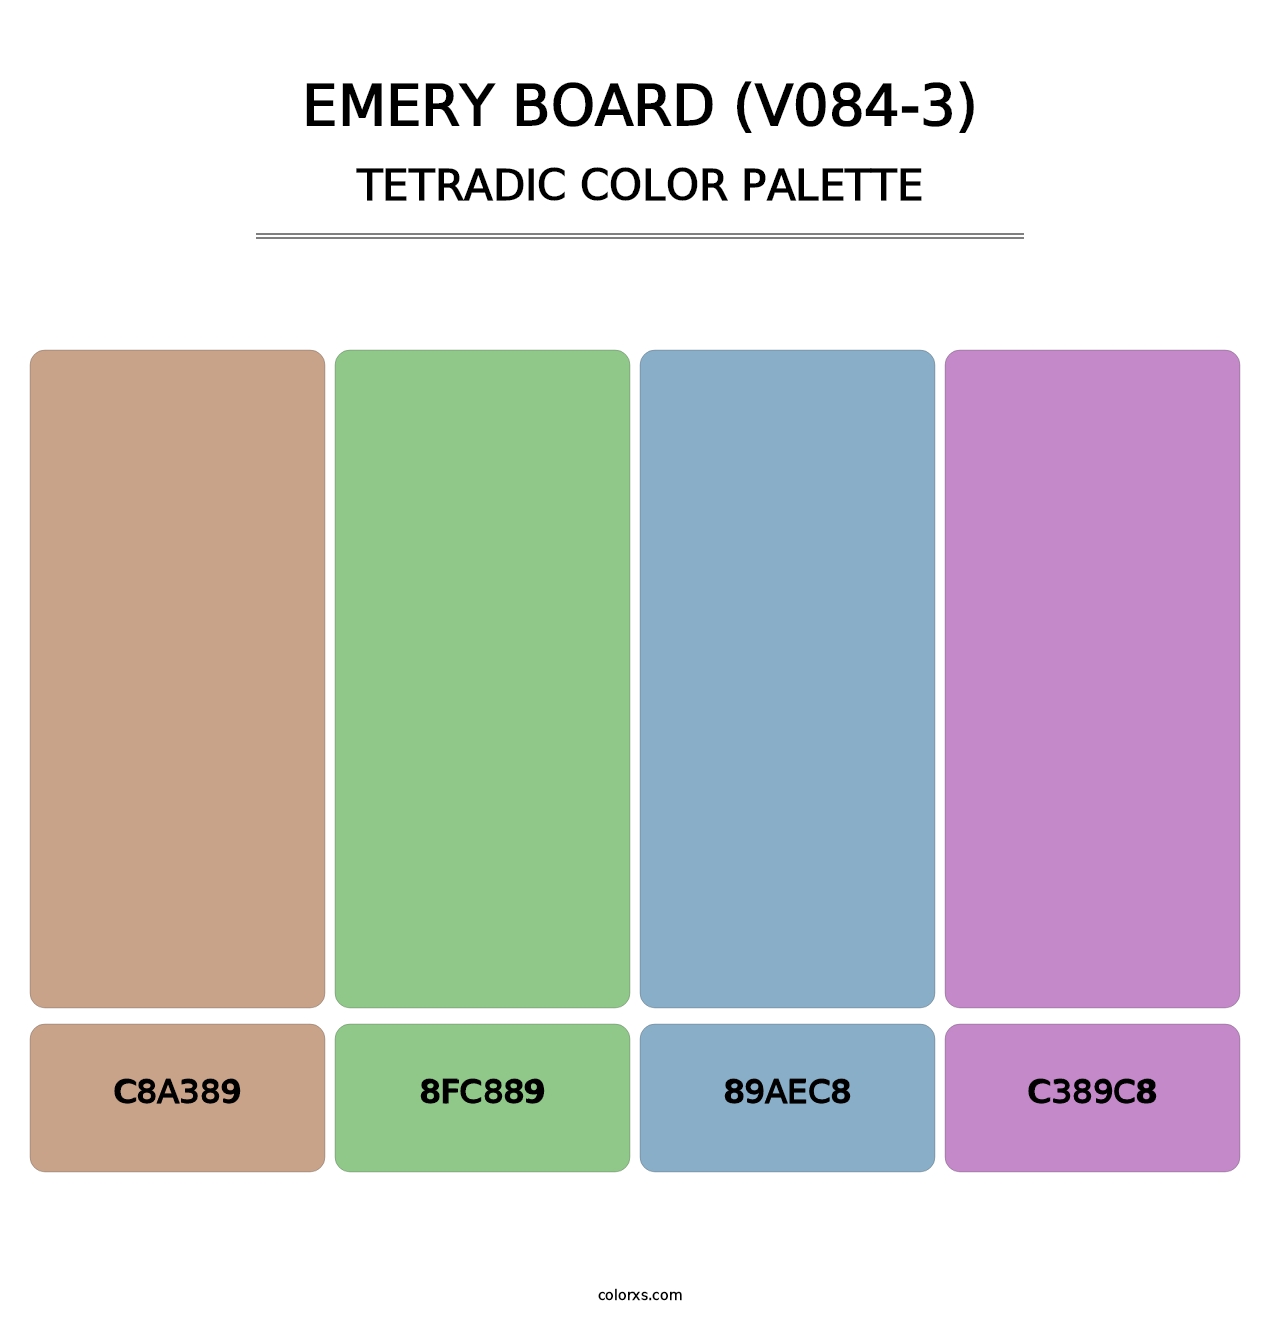 Emery Board (V084-3) - Tetradic Color Palette